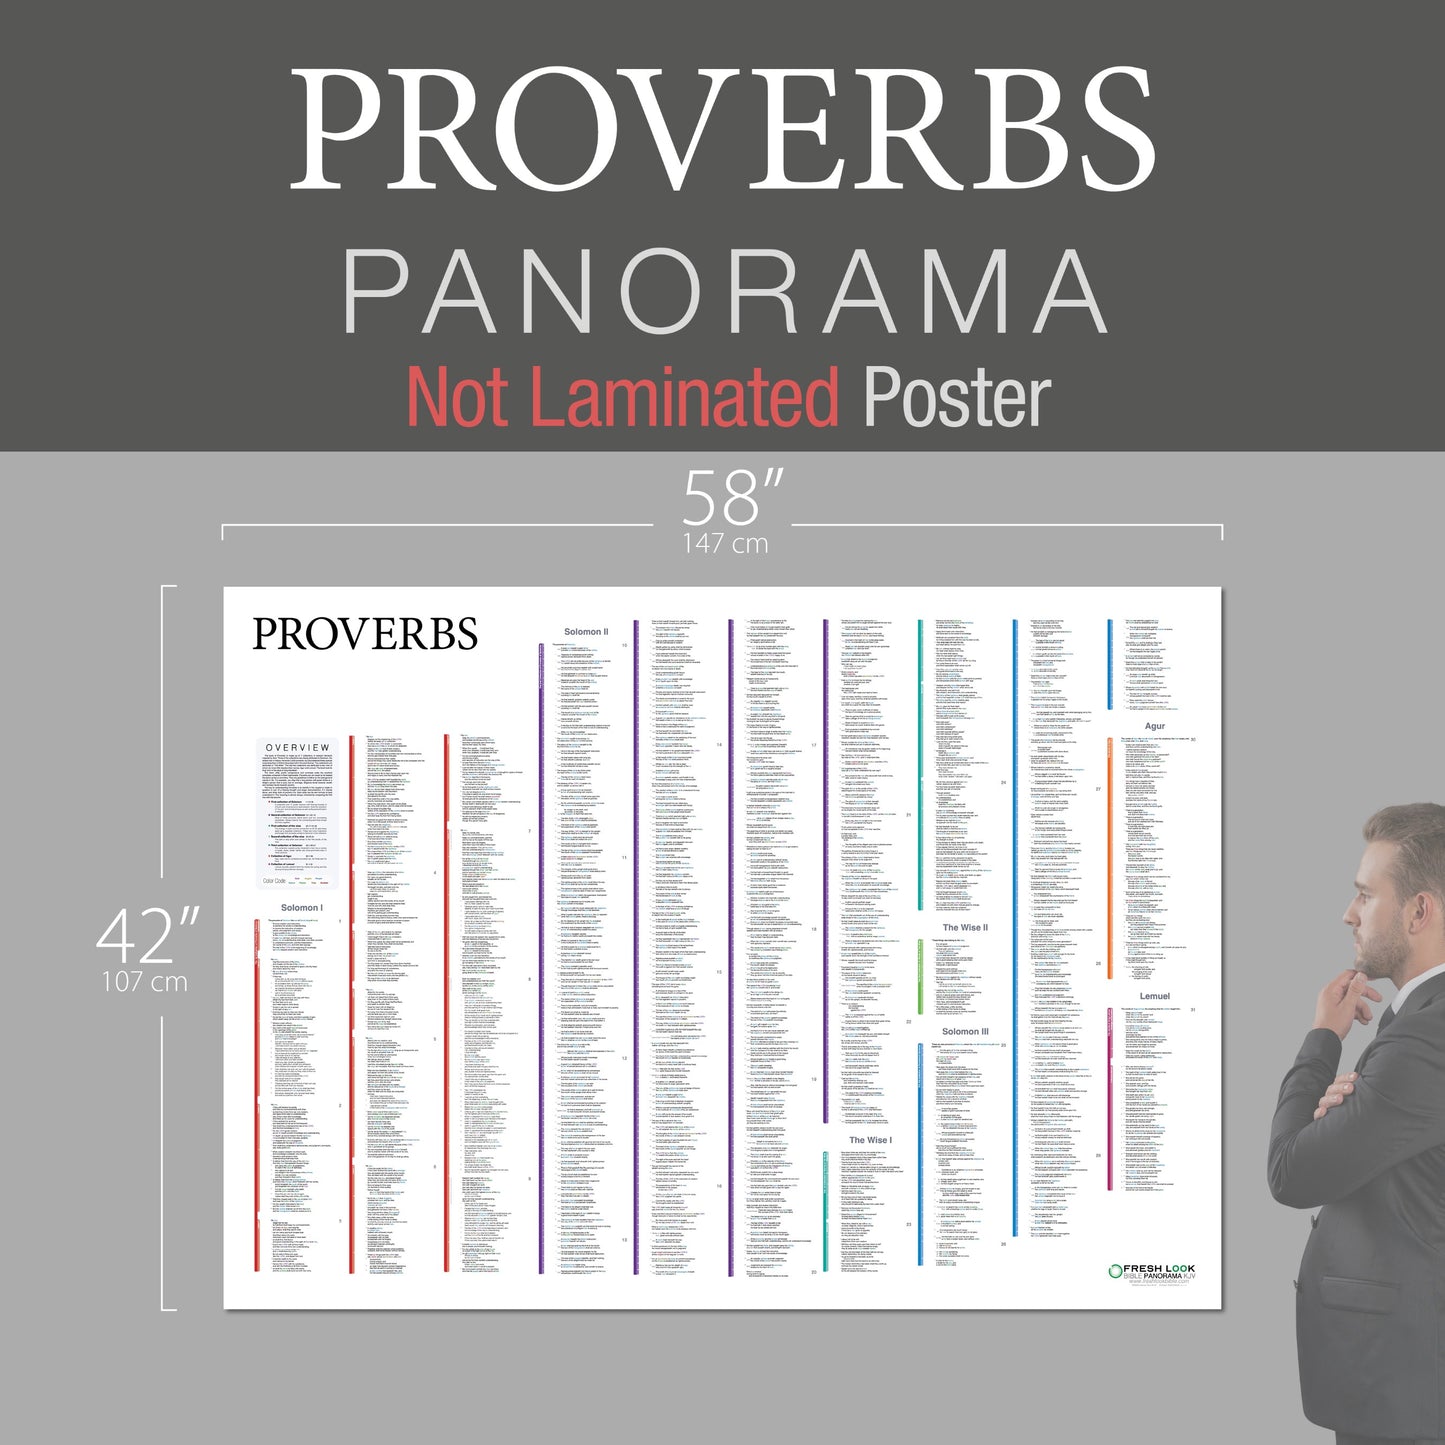 Proverbs Panorama Not Laminated